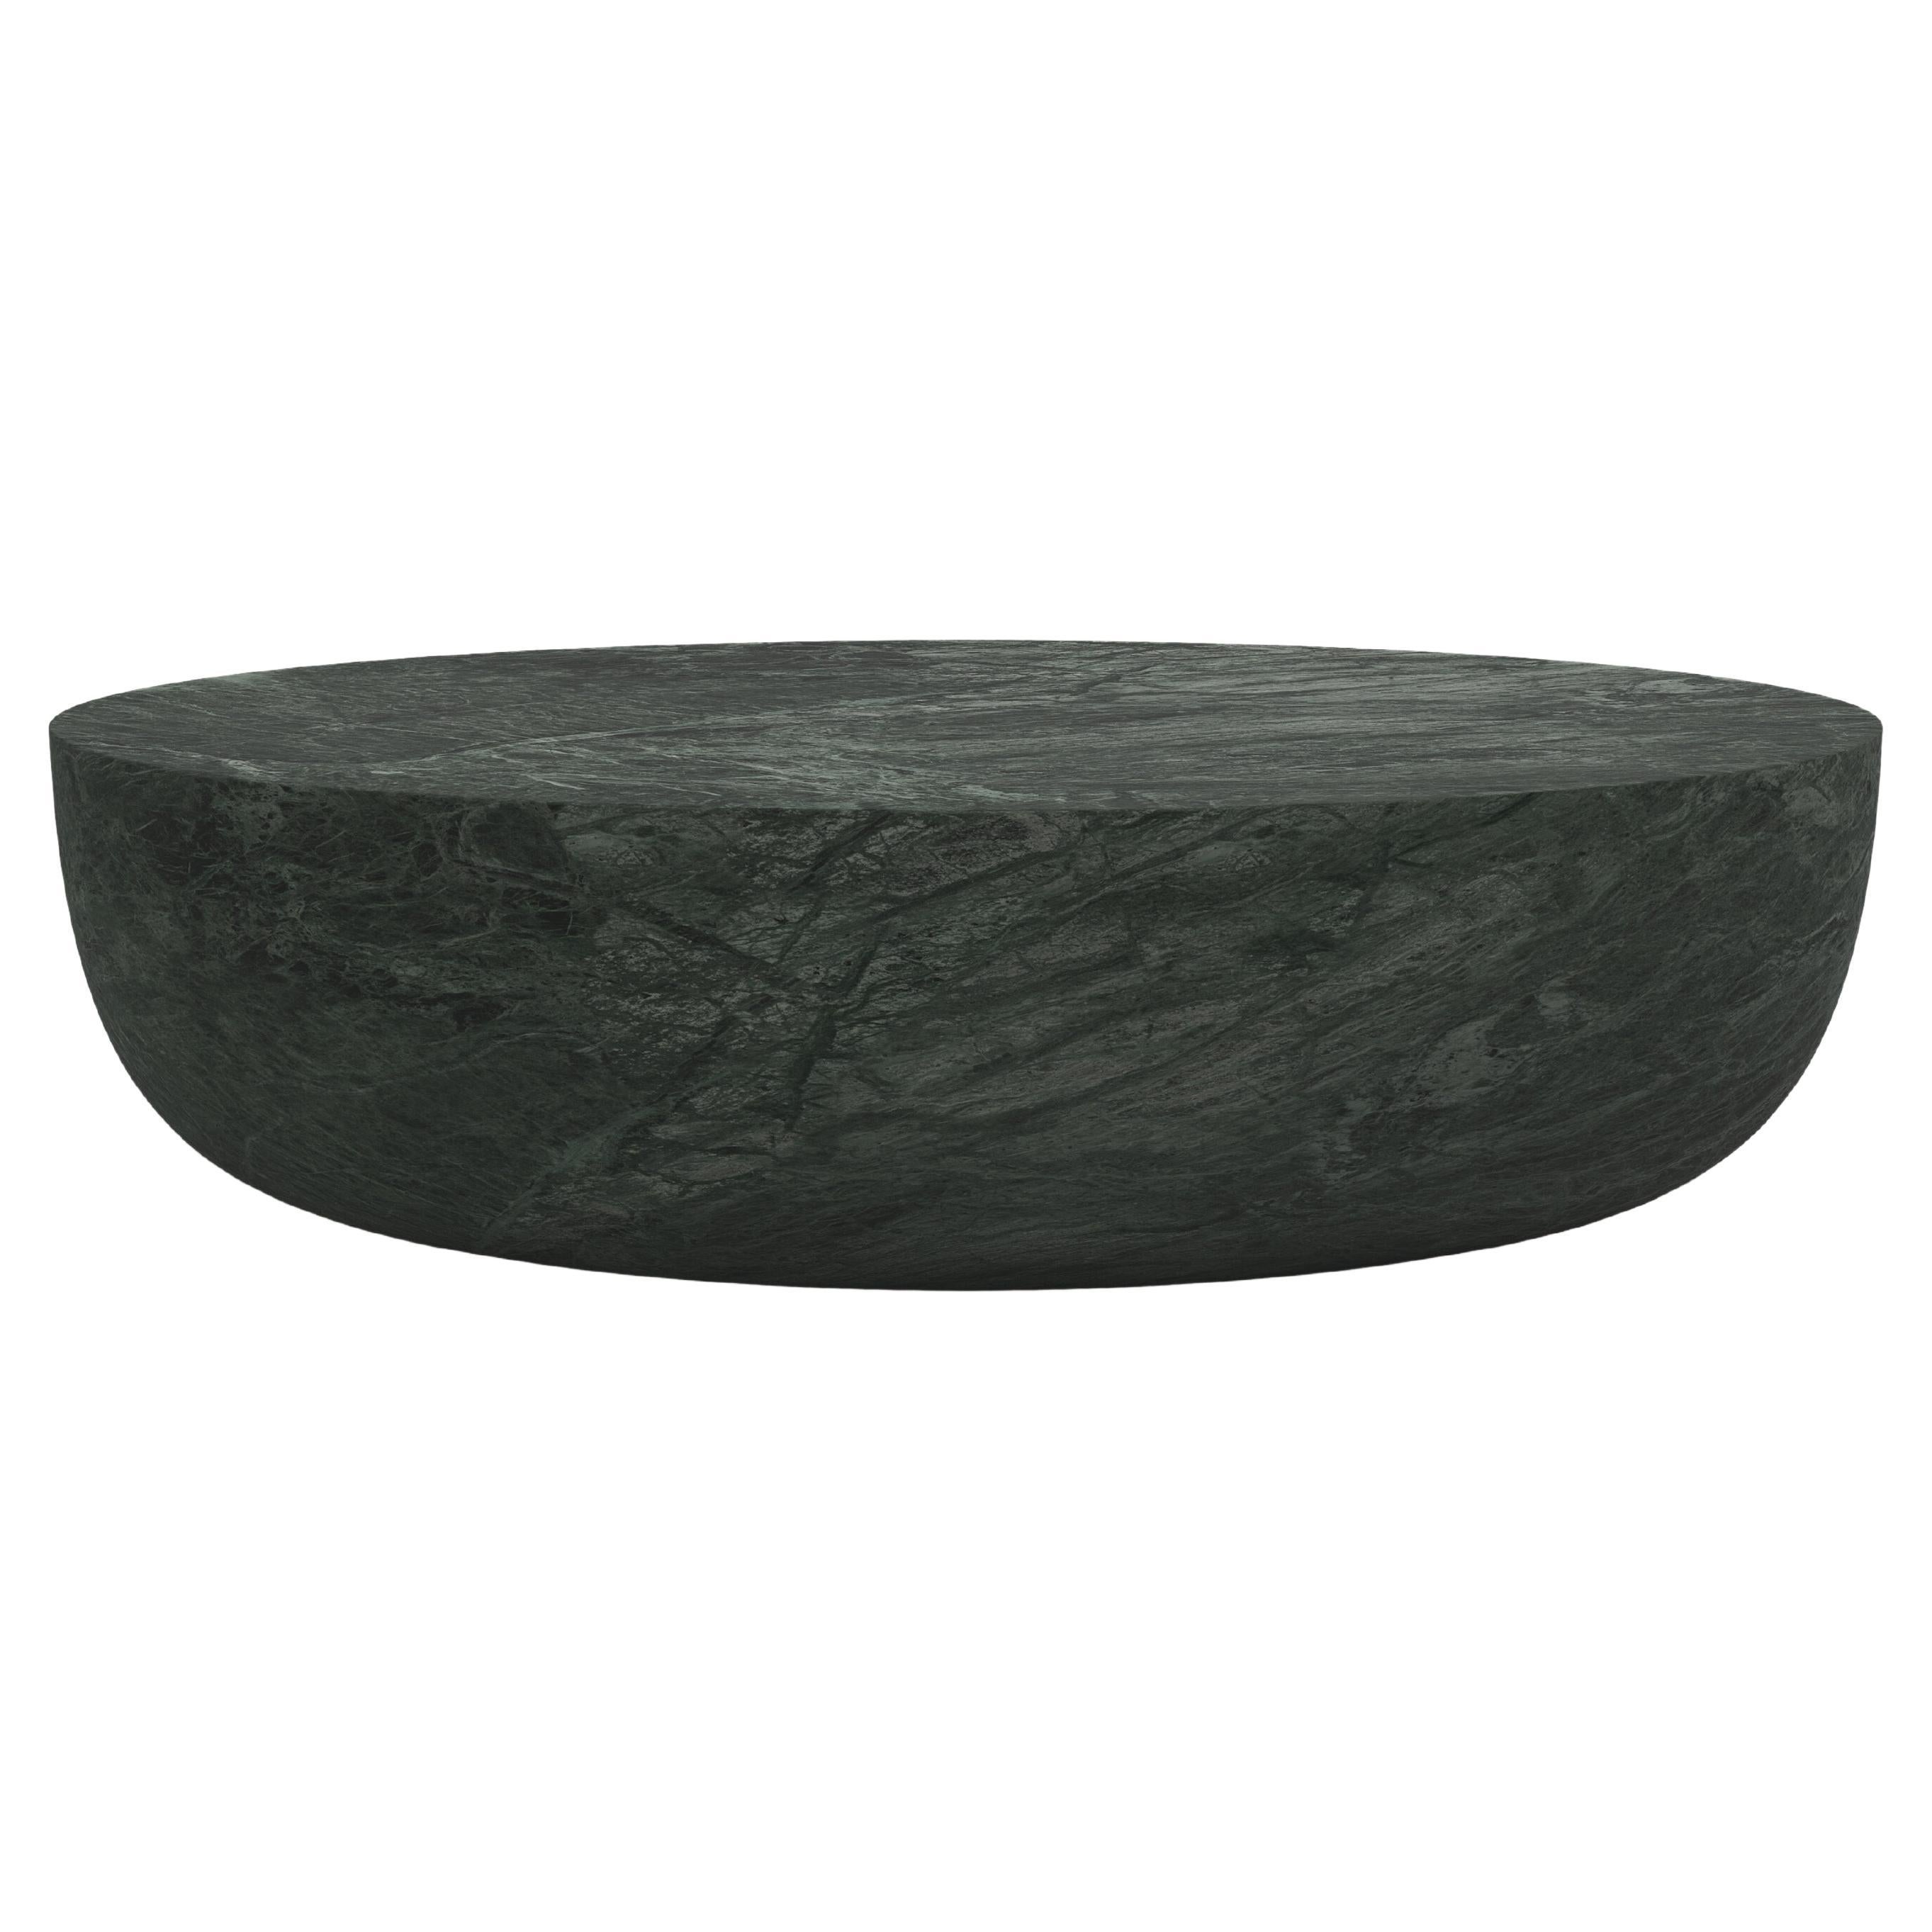 FORM(LA) Sfera table basse ovale 72 L x 48 W x 16 H marbre Verde Guatemala